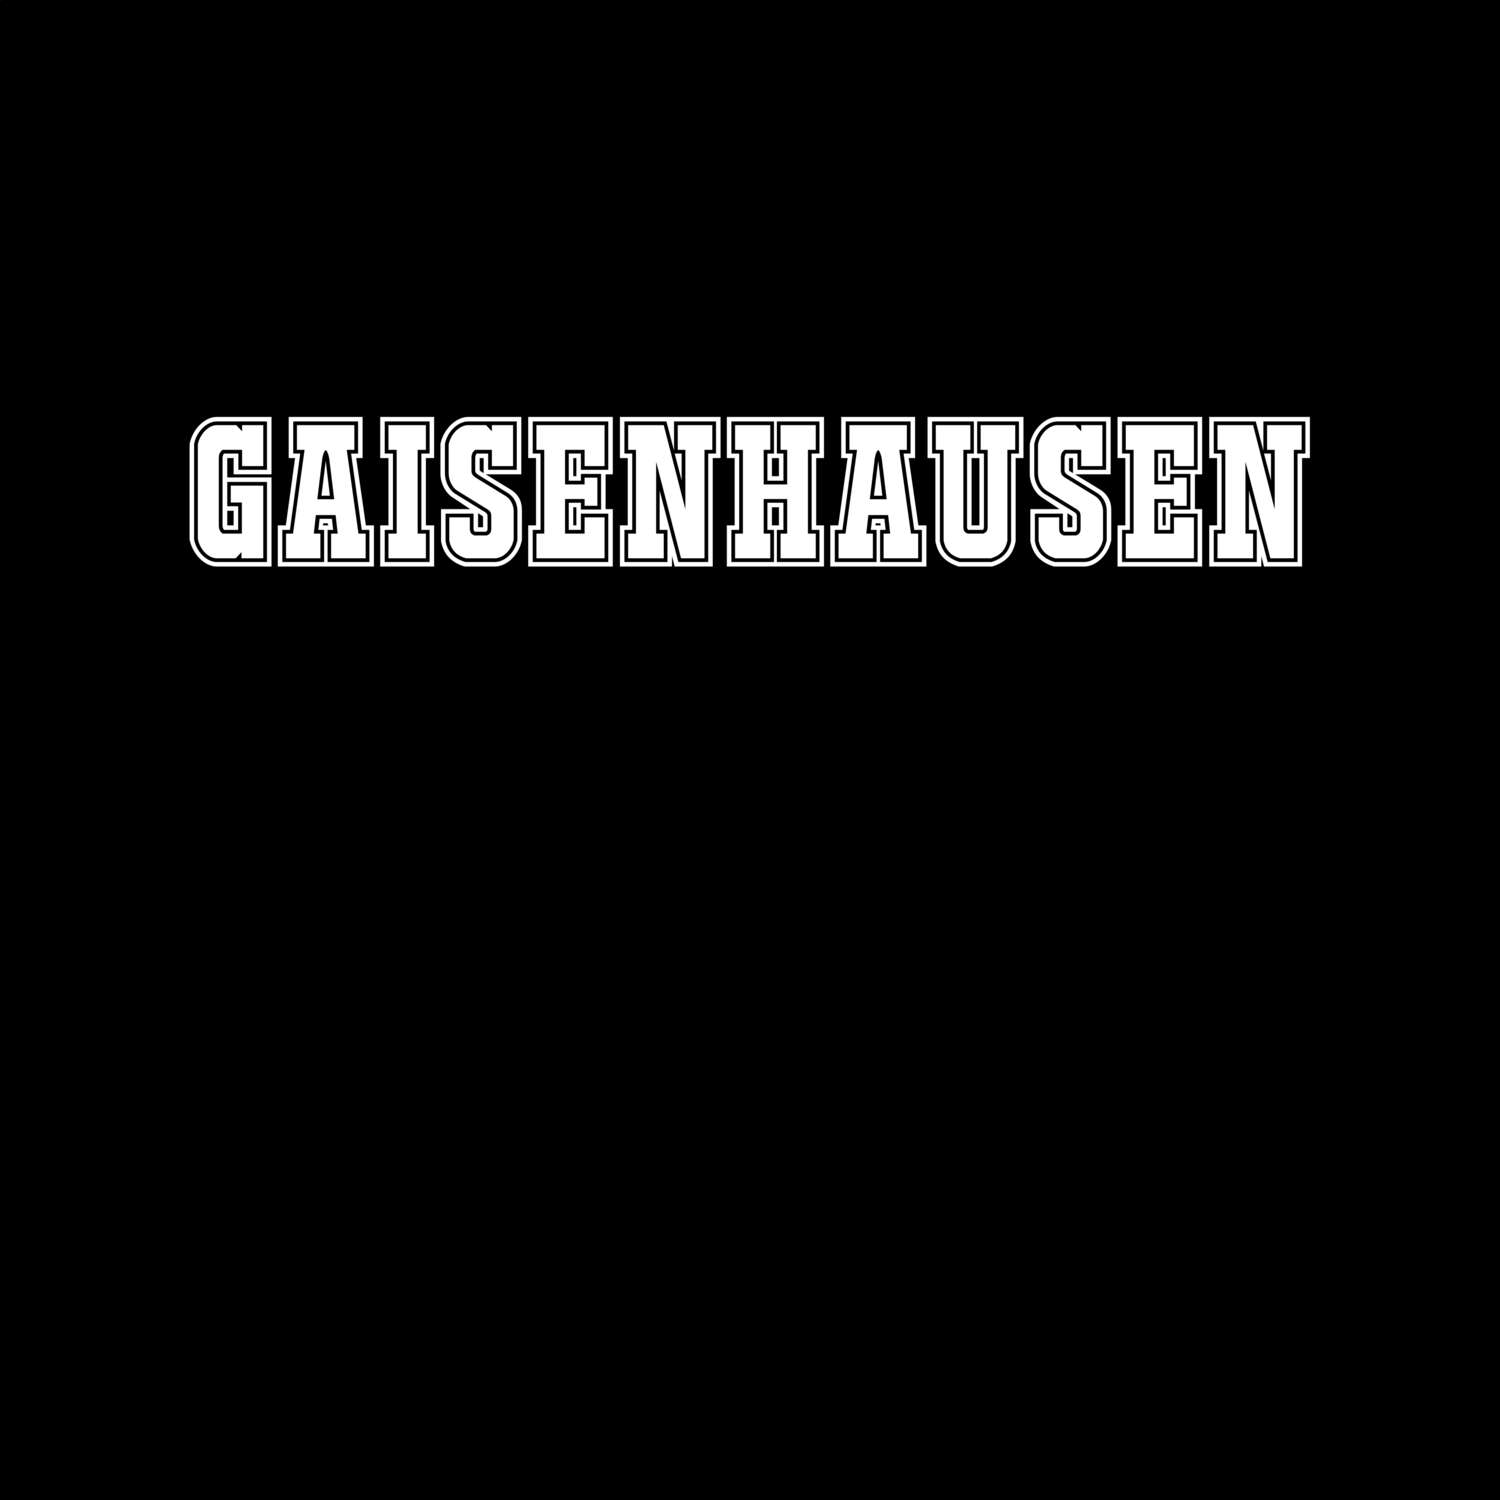 Gaisenhausen T-Shirt »Classic«